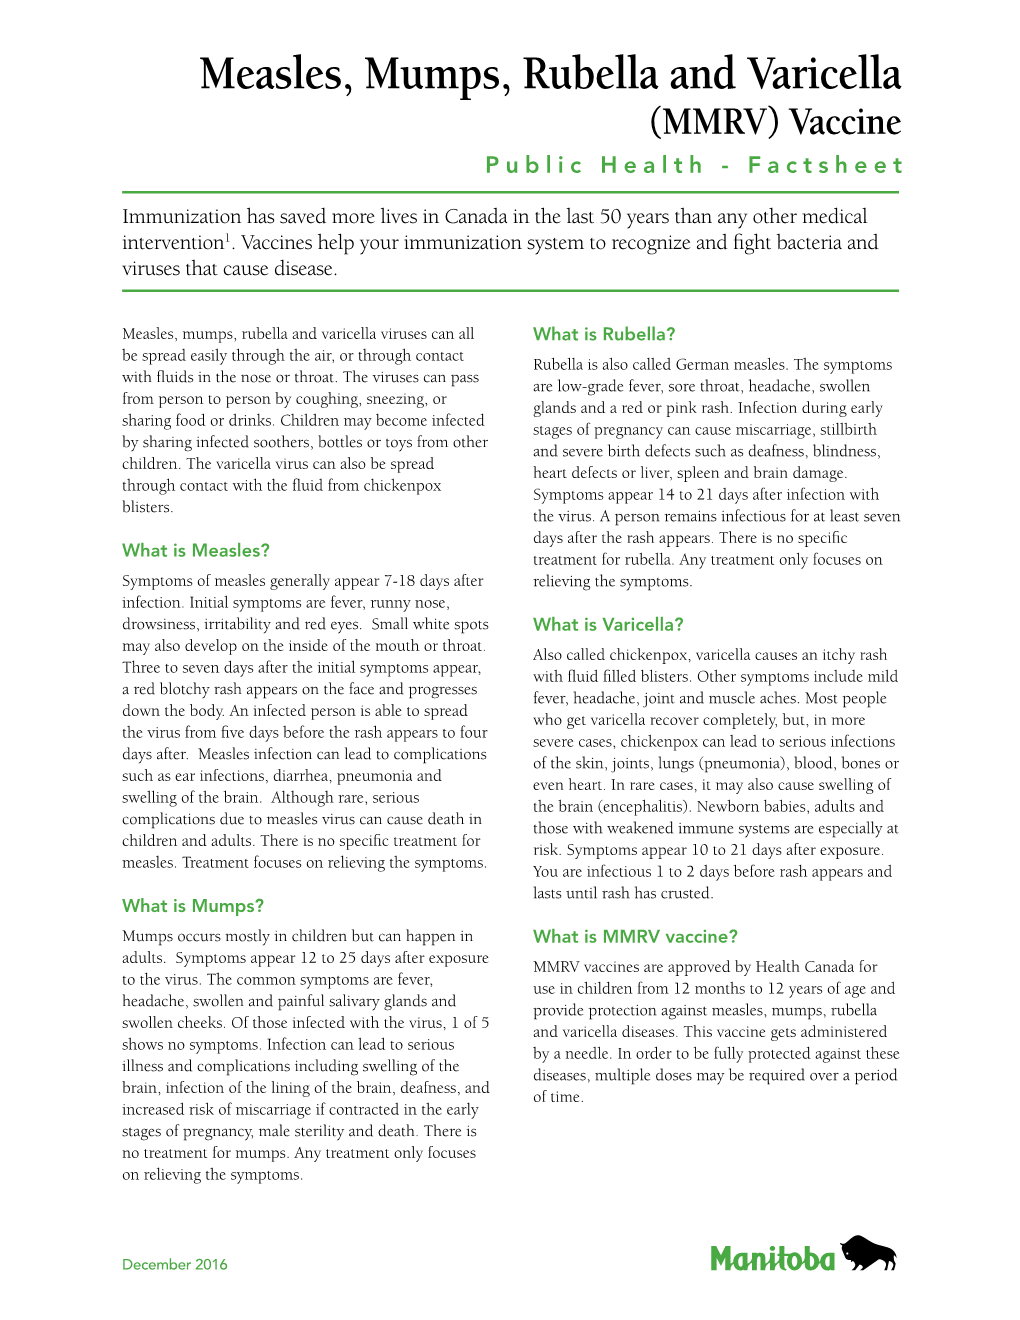 Measles, Mumps, Rubella and Varicella (MMRV) Vaccine Public Health - Factsheet